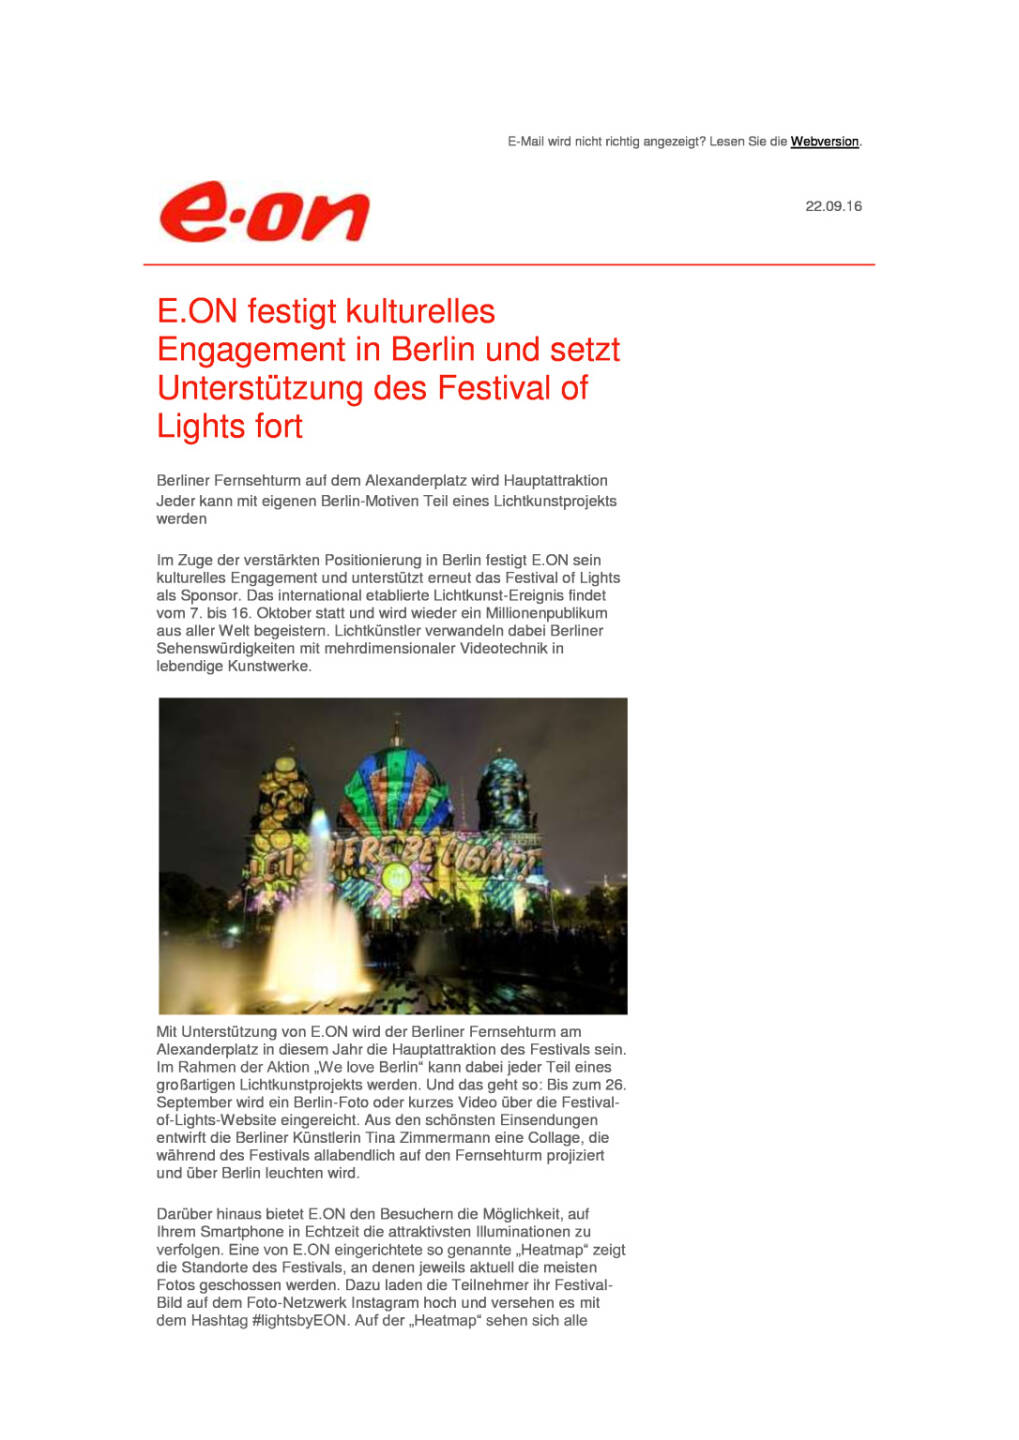 E.ON: Festival of Lights, Seite 1/2, komplettes Dokument unter http://boerse-social.com/static/uploads/file_1820_eon_festival_of_lights.pdf